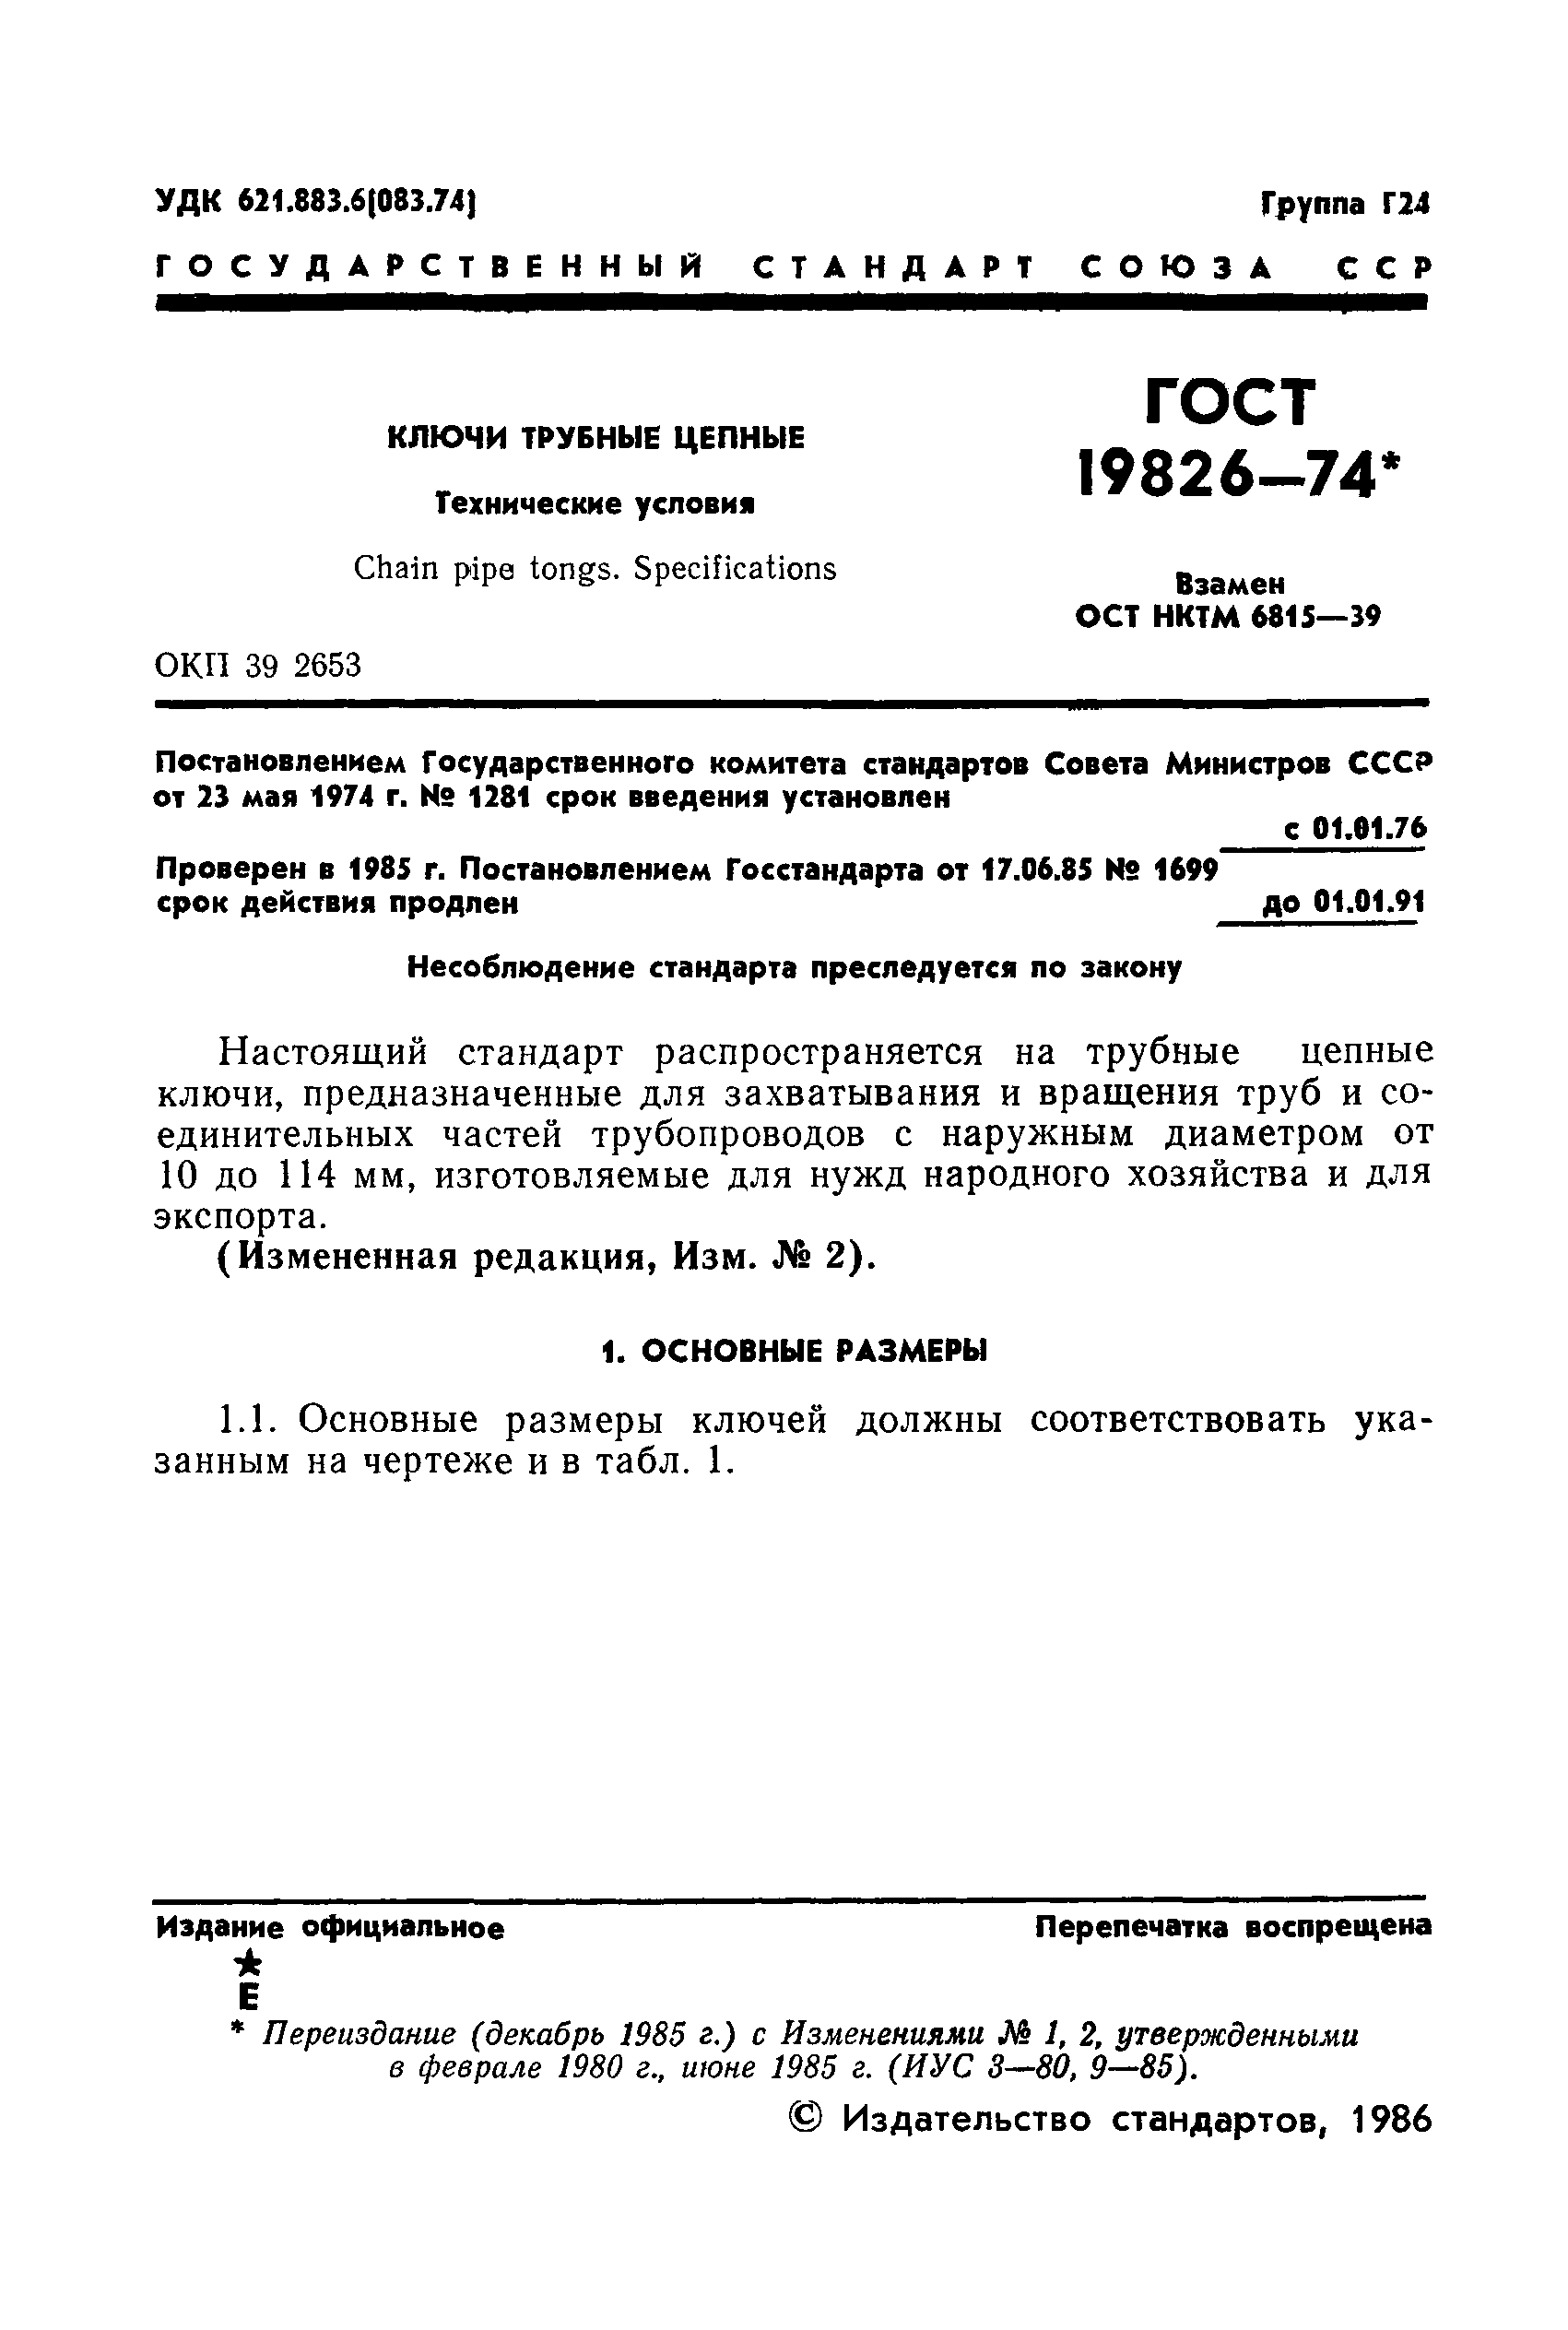 ГОСТ 19826-74